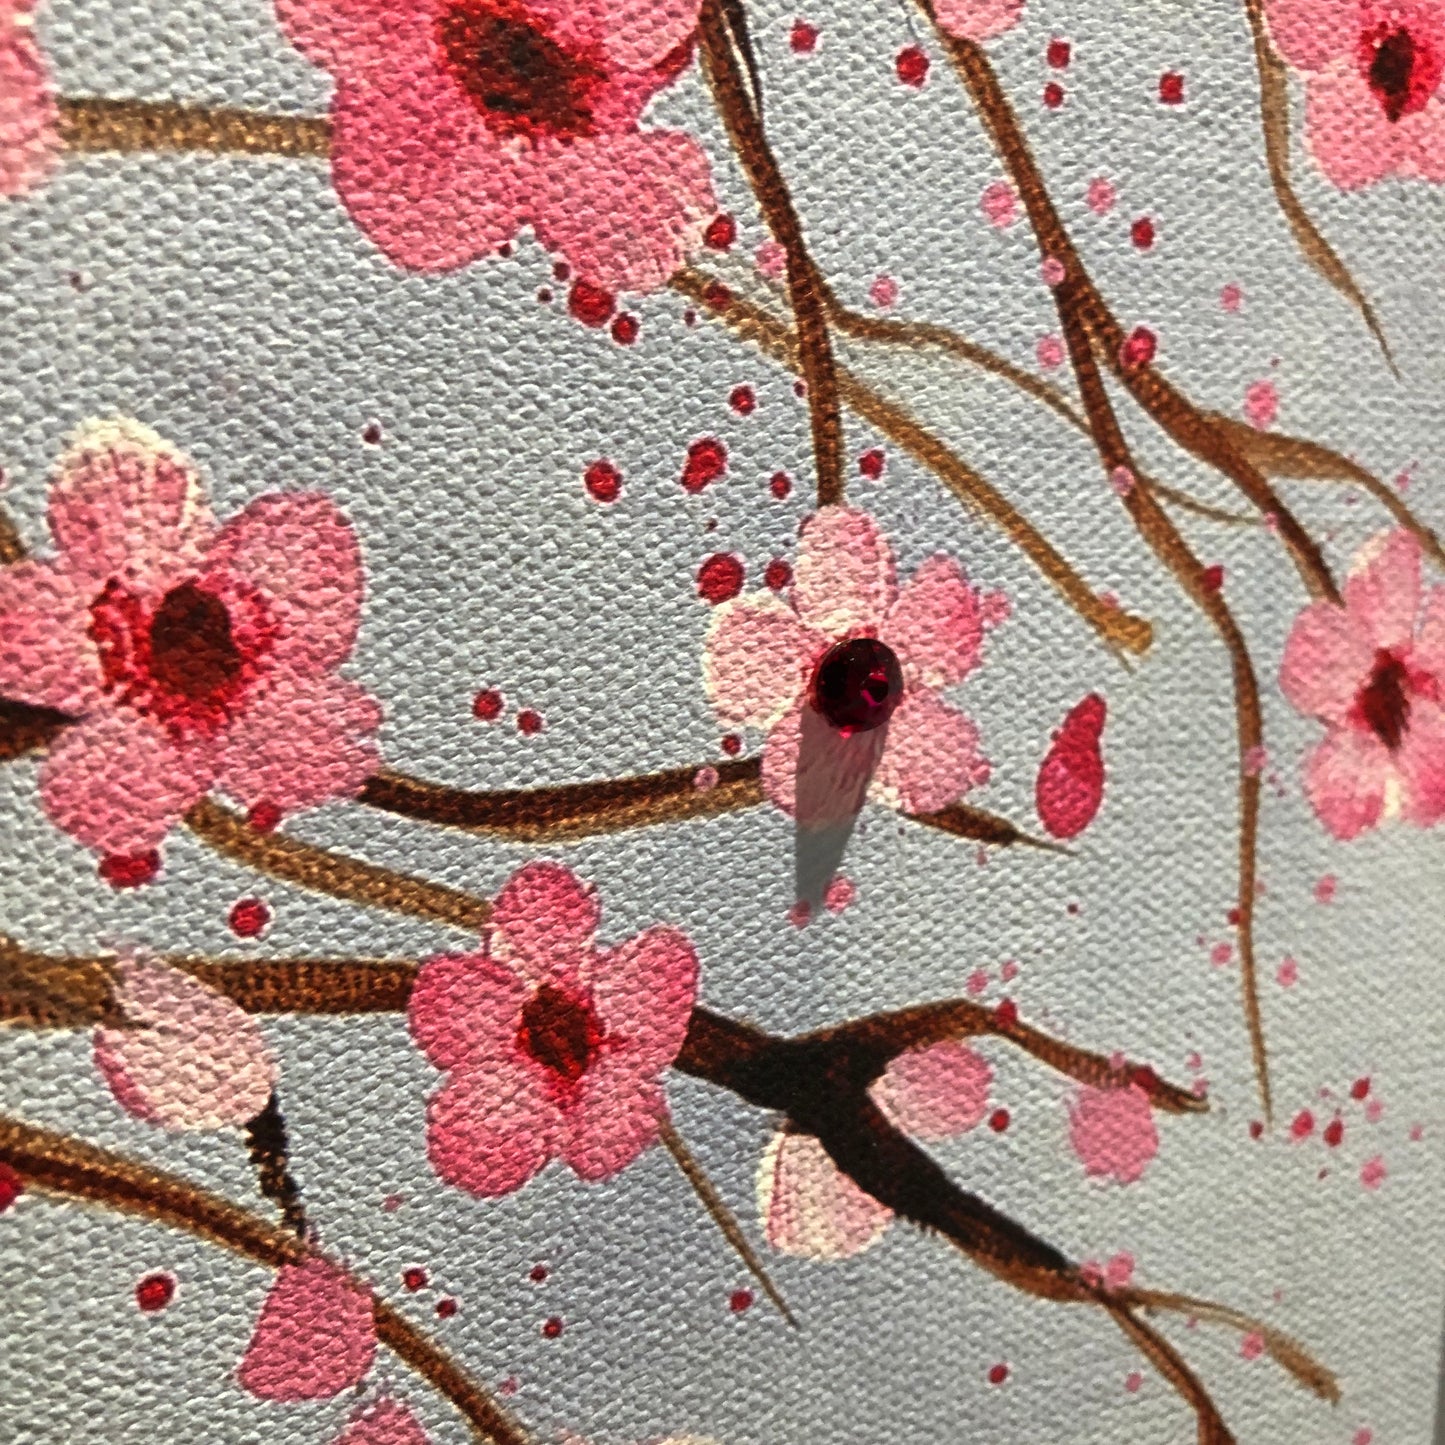 Love Blossoms by Jennifer Hogwood